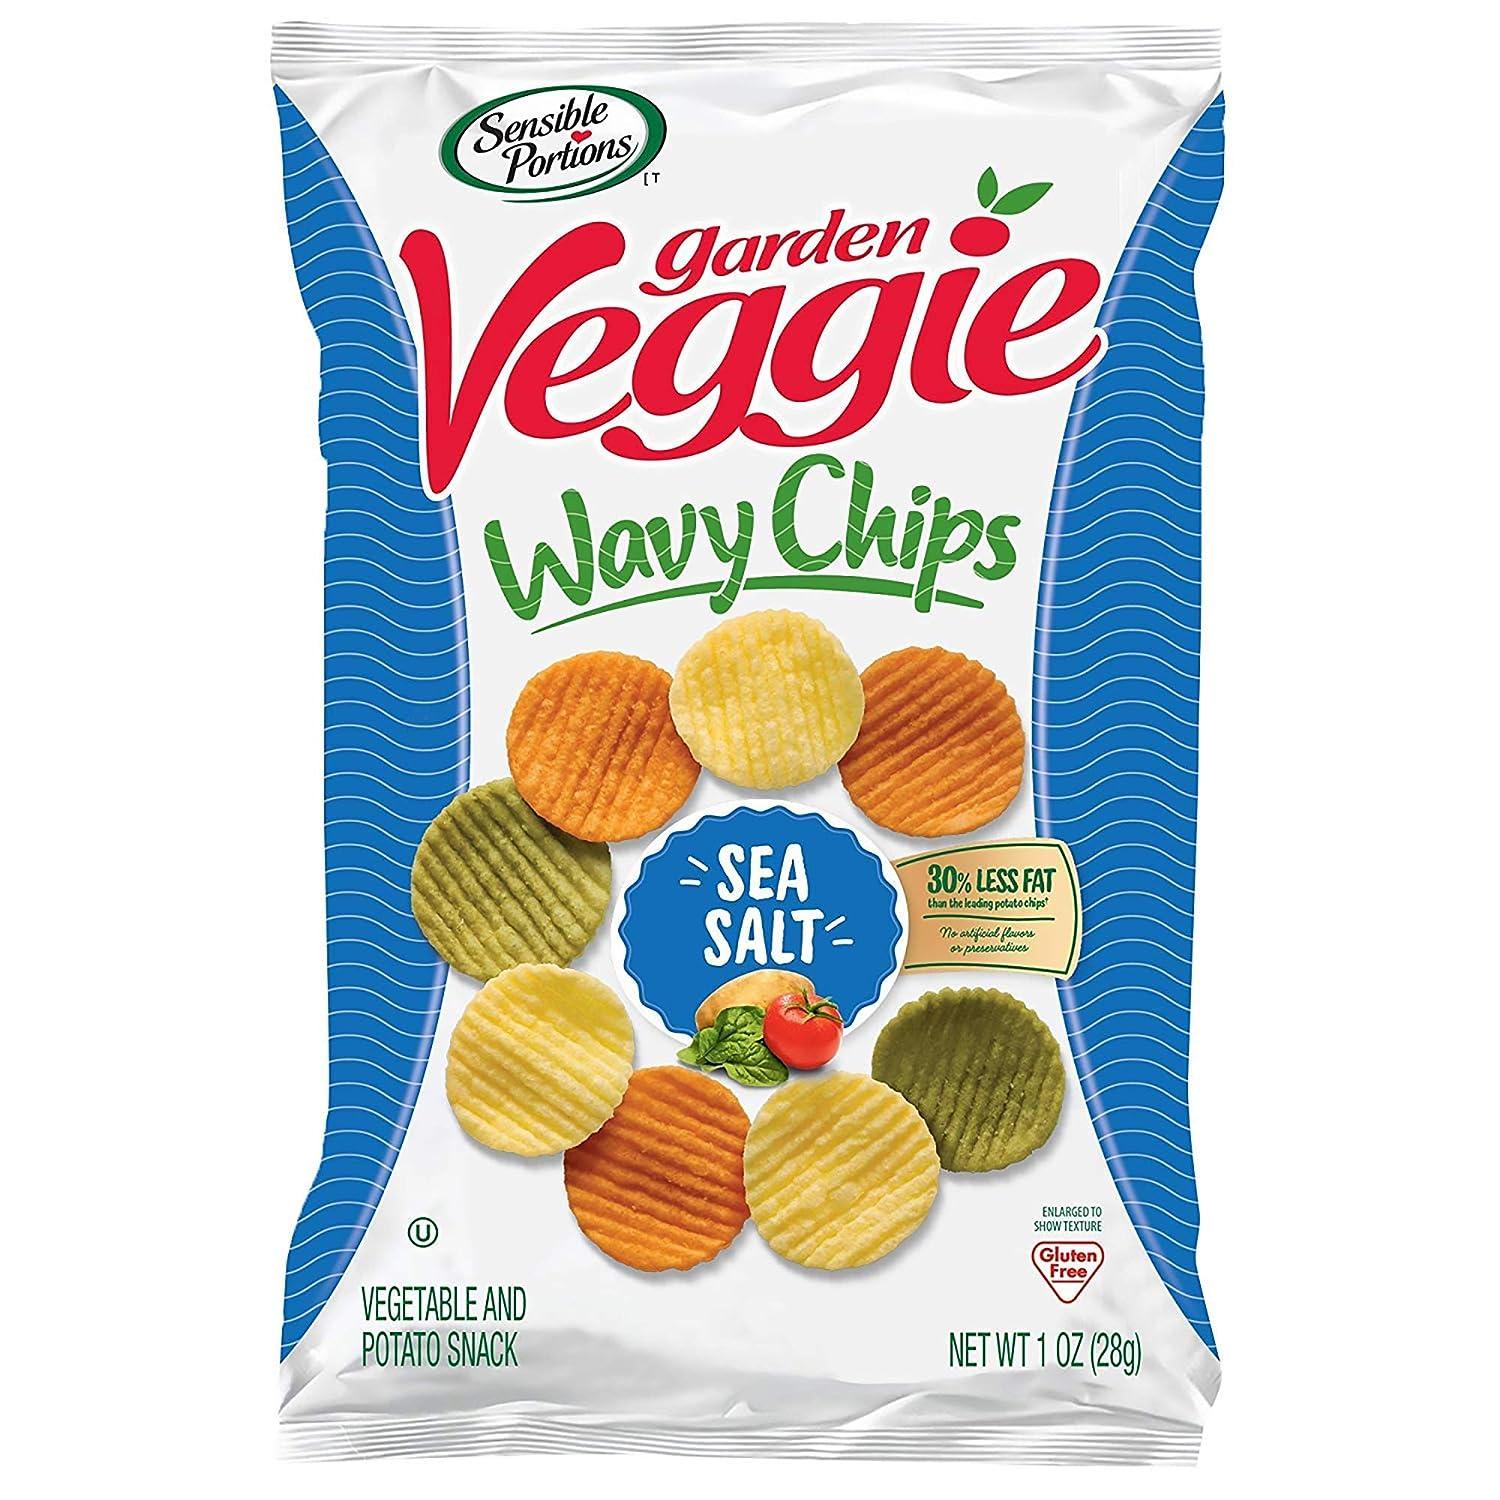 Sensible Portions Garden Veggie Chips 24 Pack for $10.25